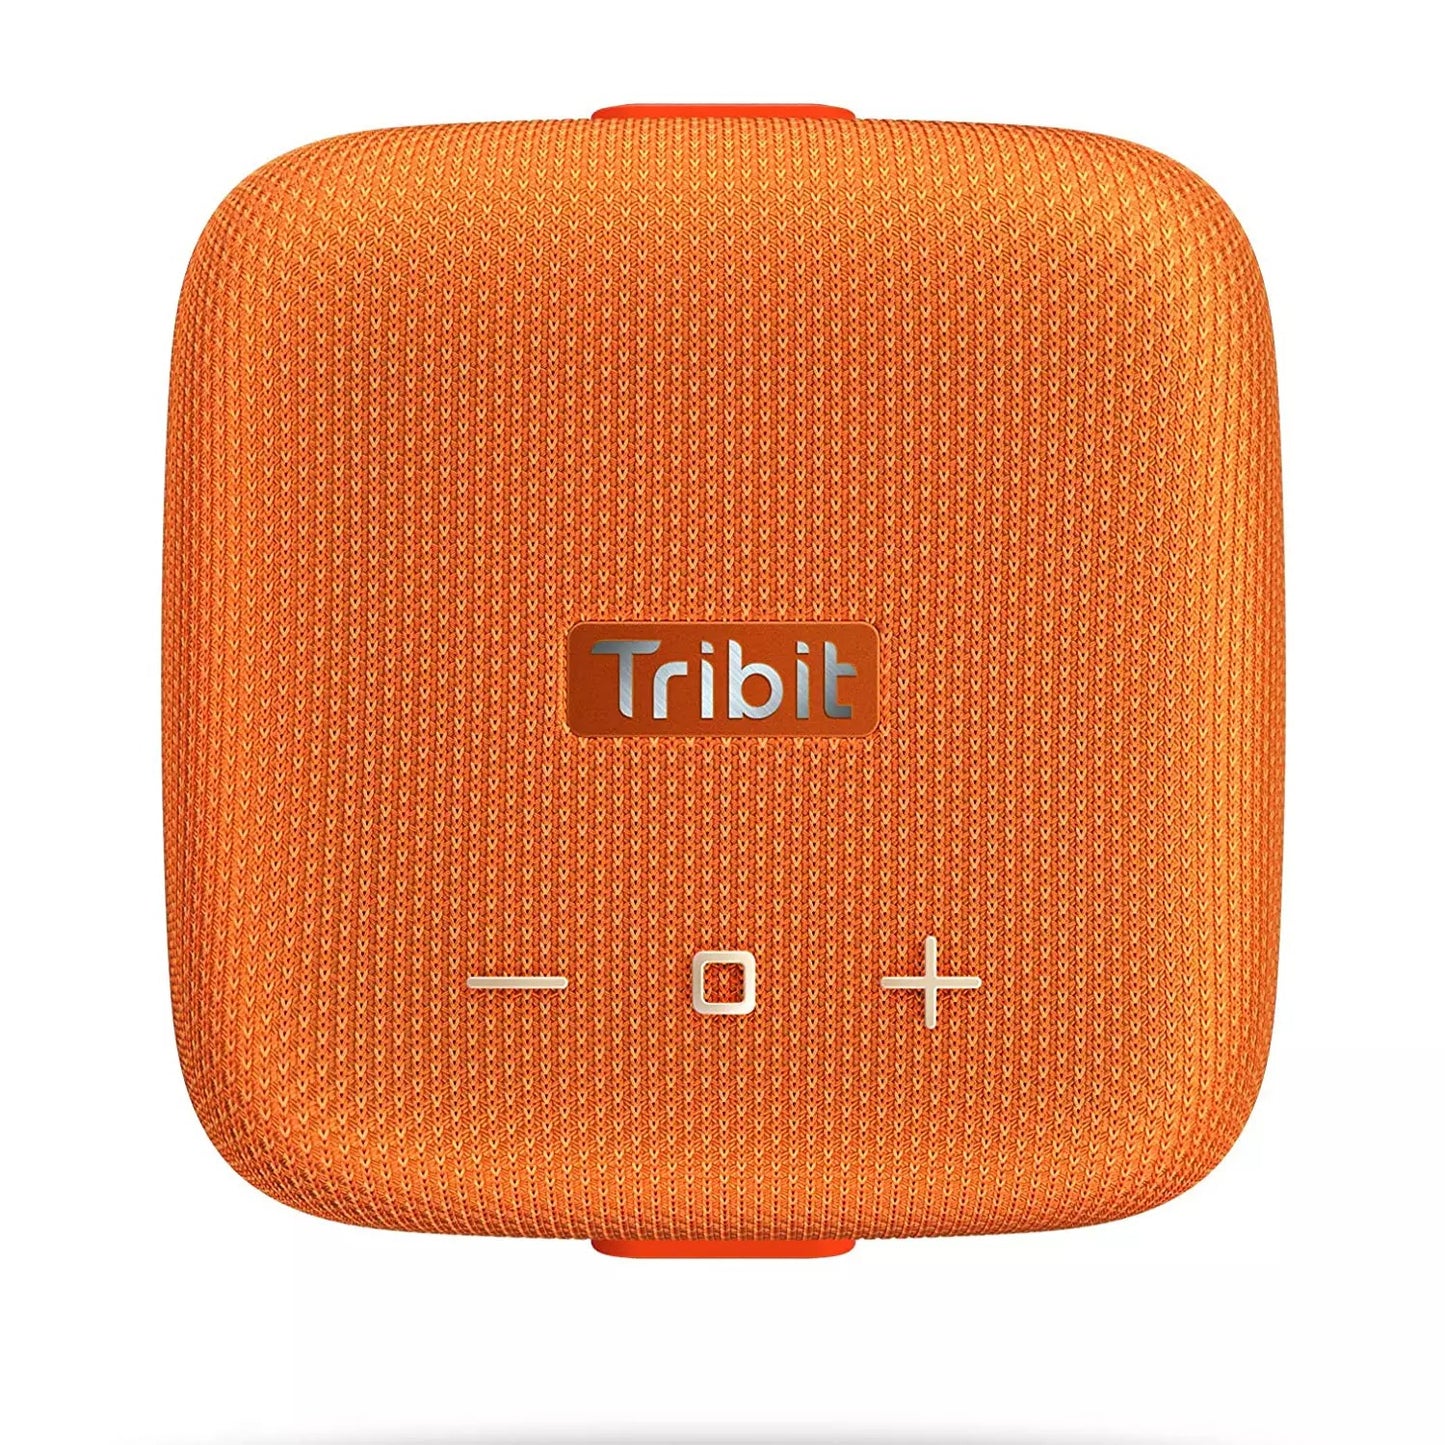 Tribit StormBox Micro Full Surround Sound, Enhanced Bass Speaker (Orange) Price in Pakistan